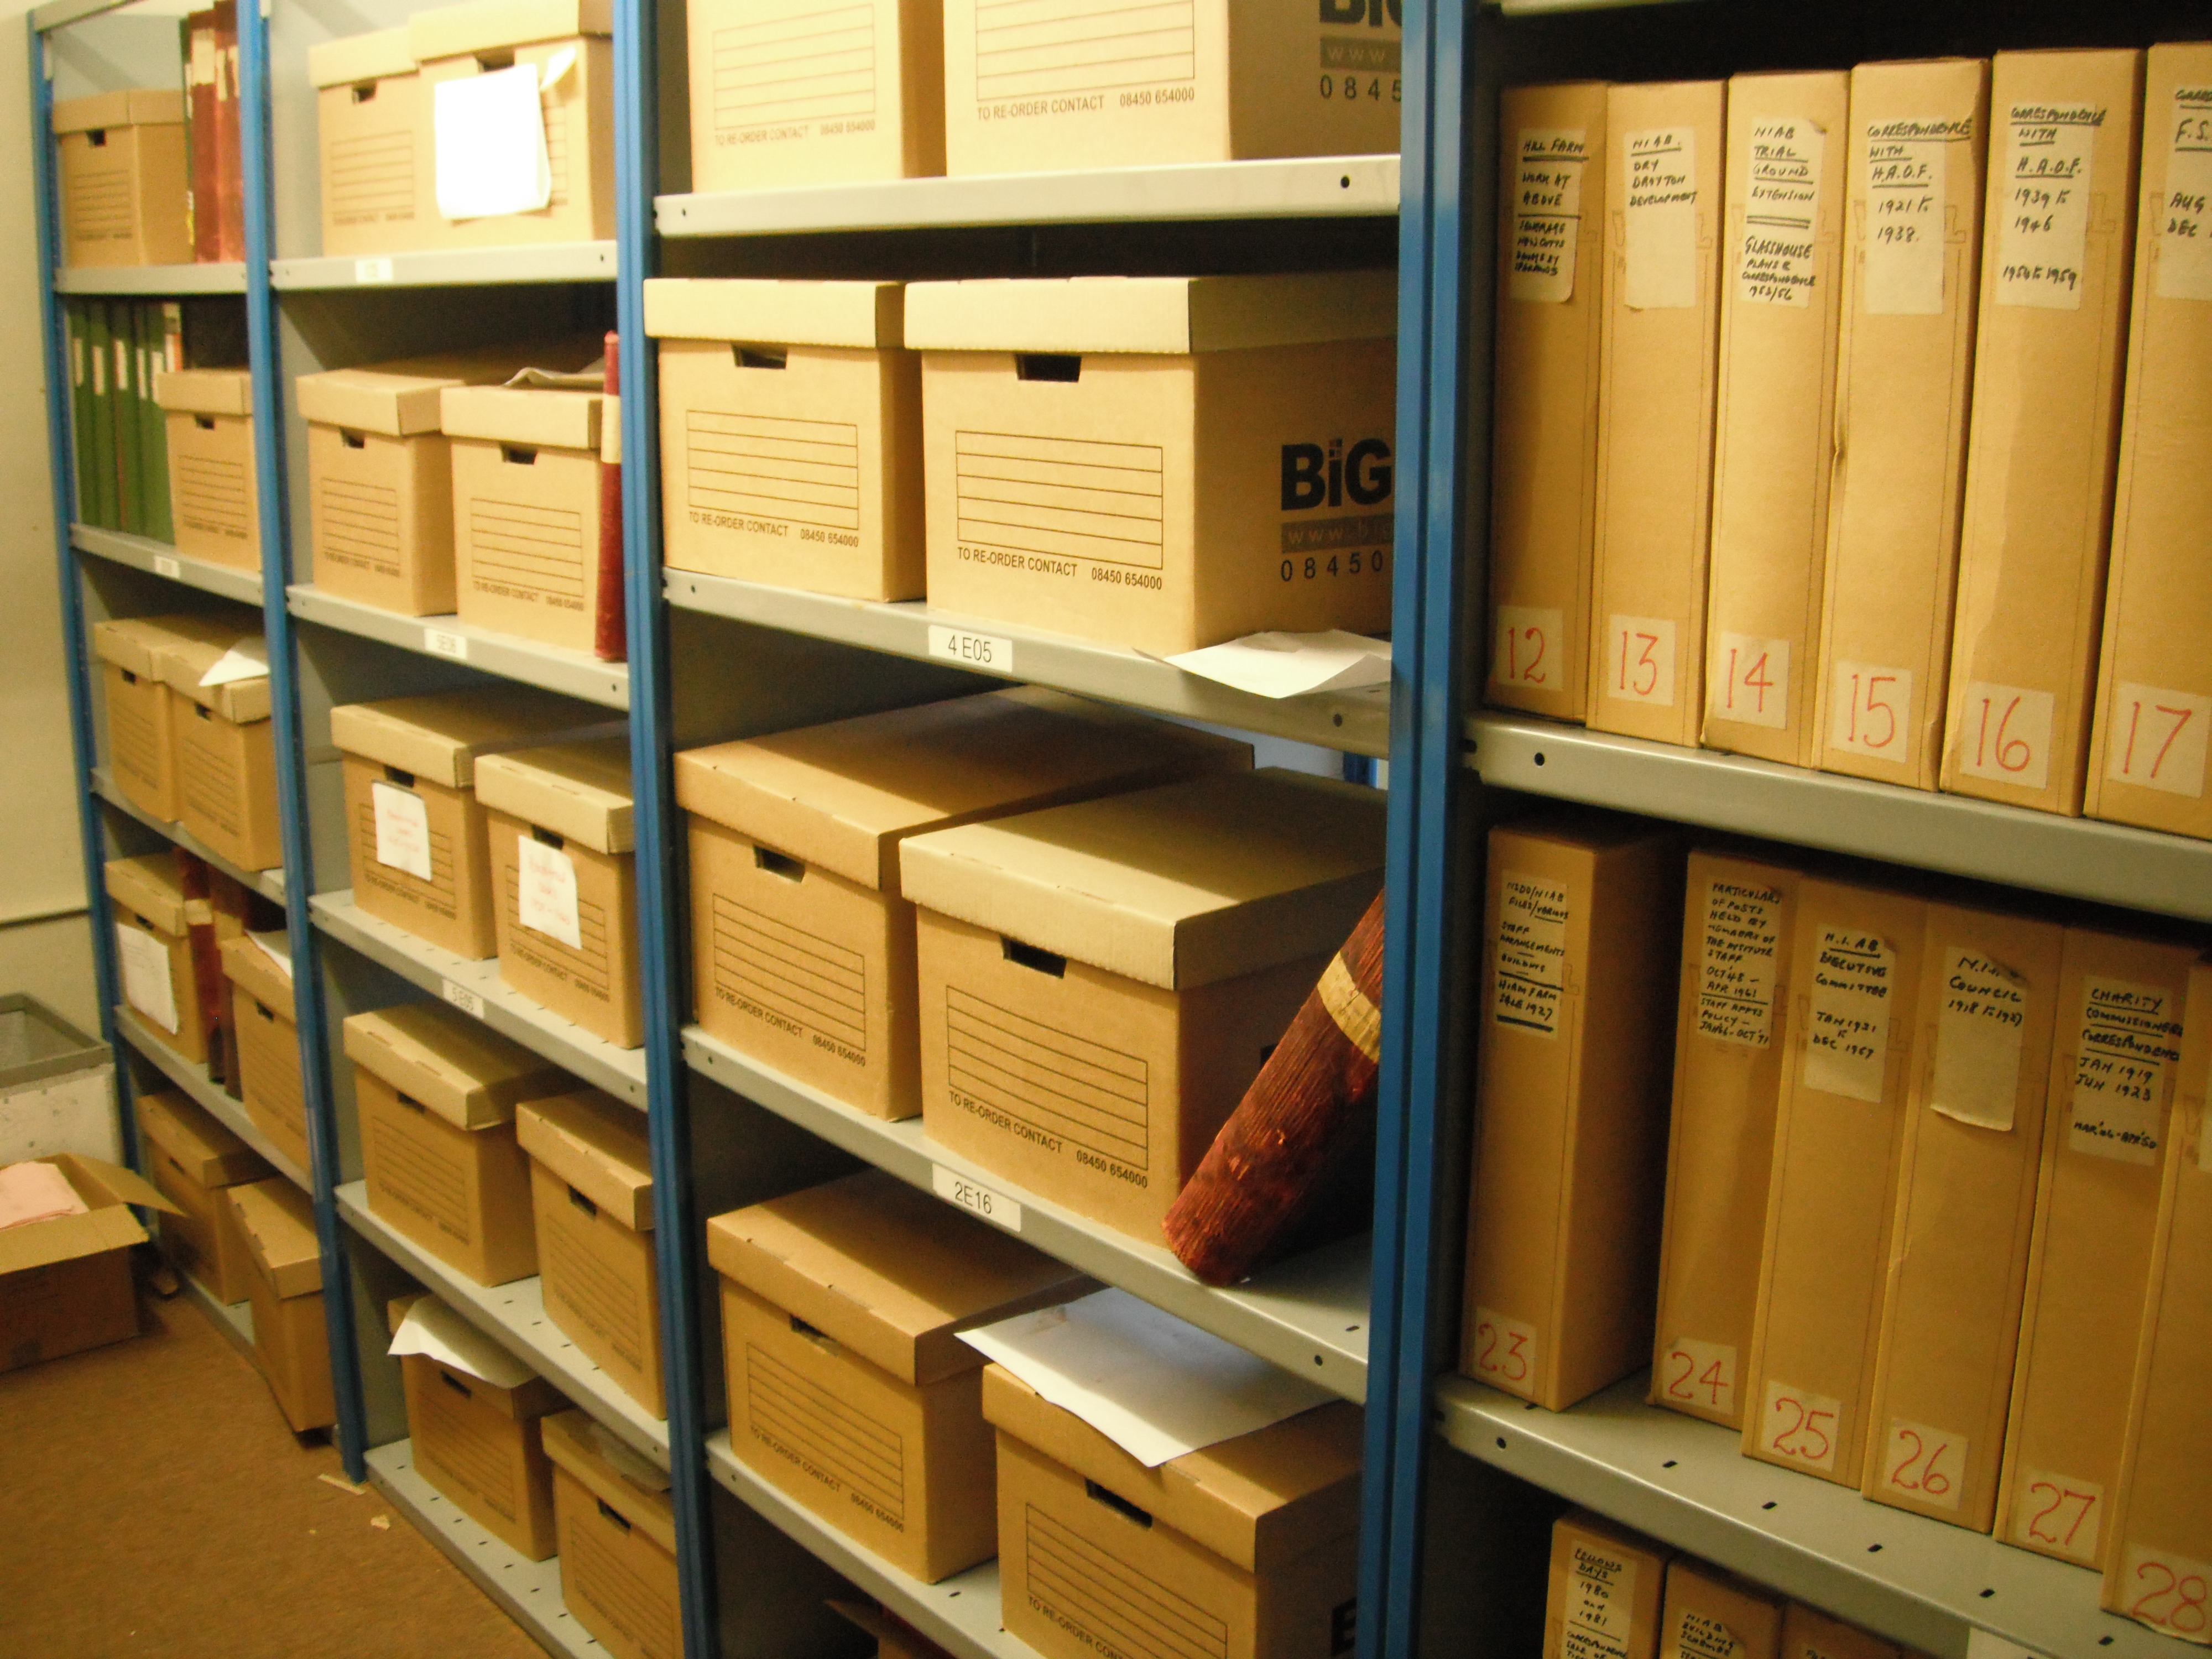 Архив. Хранение документов. Хранение архива. Архивное хранение дел это. Архивное хранилище документов.